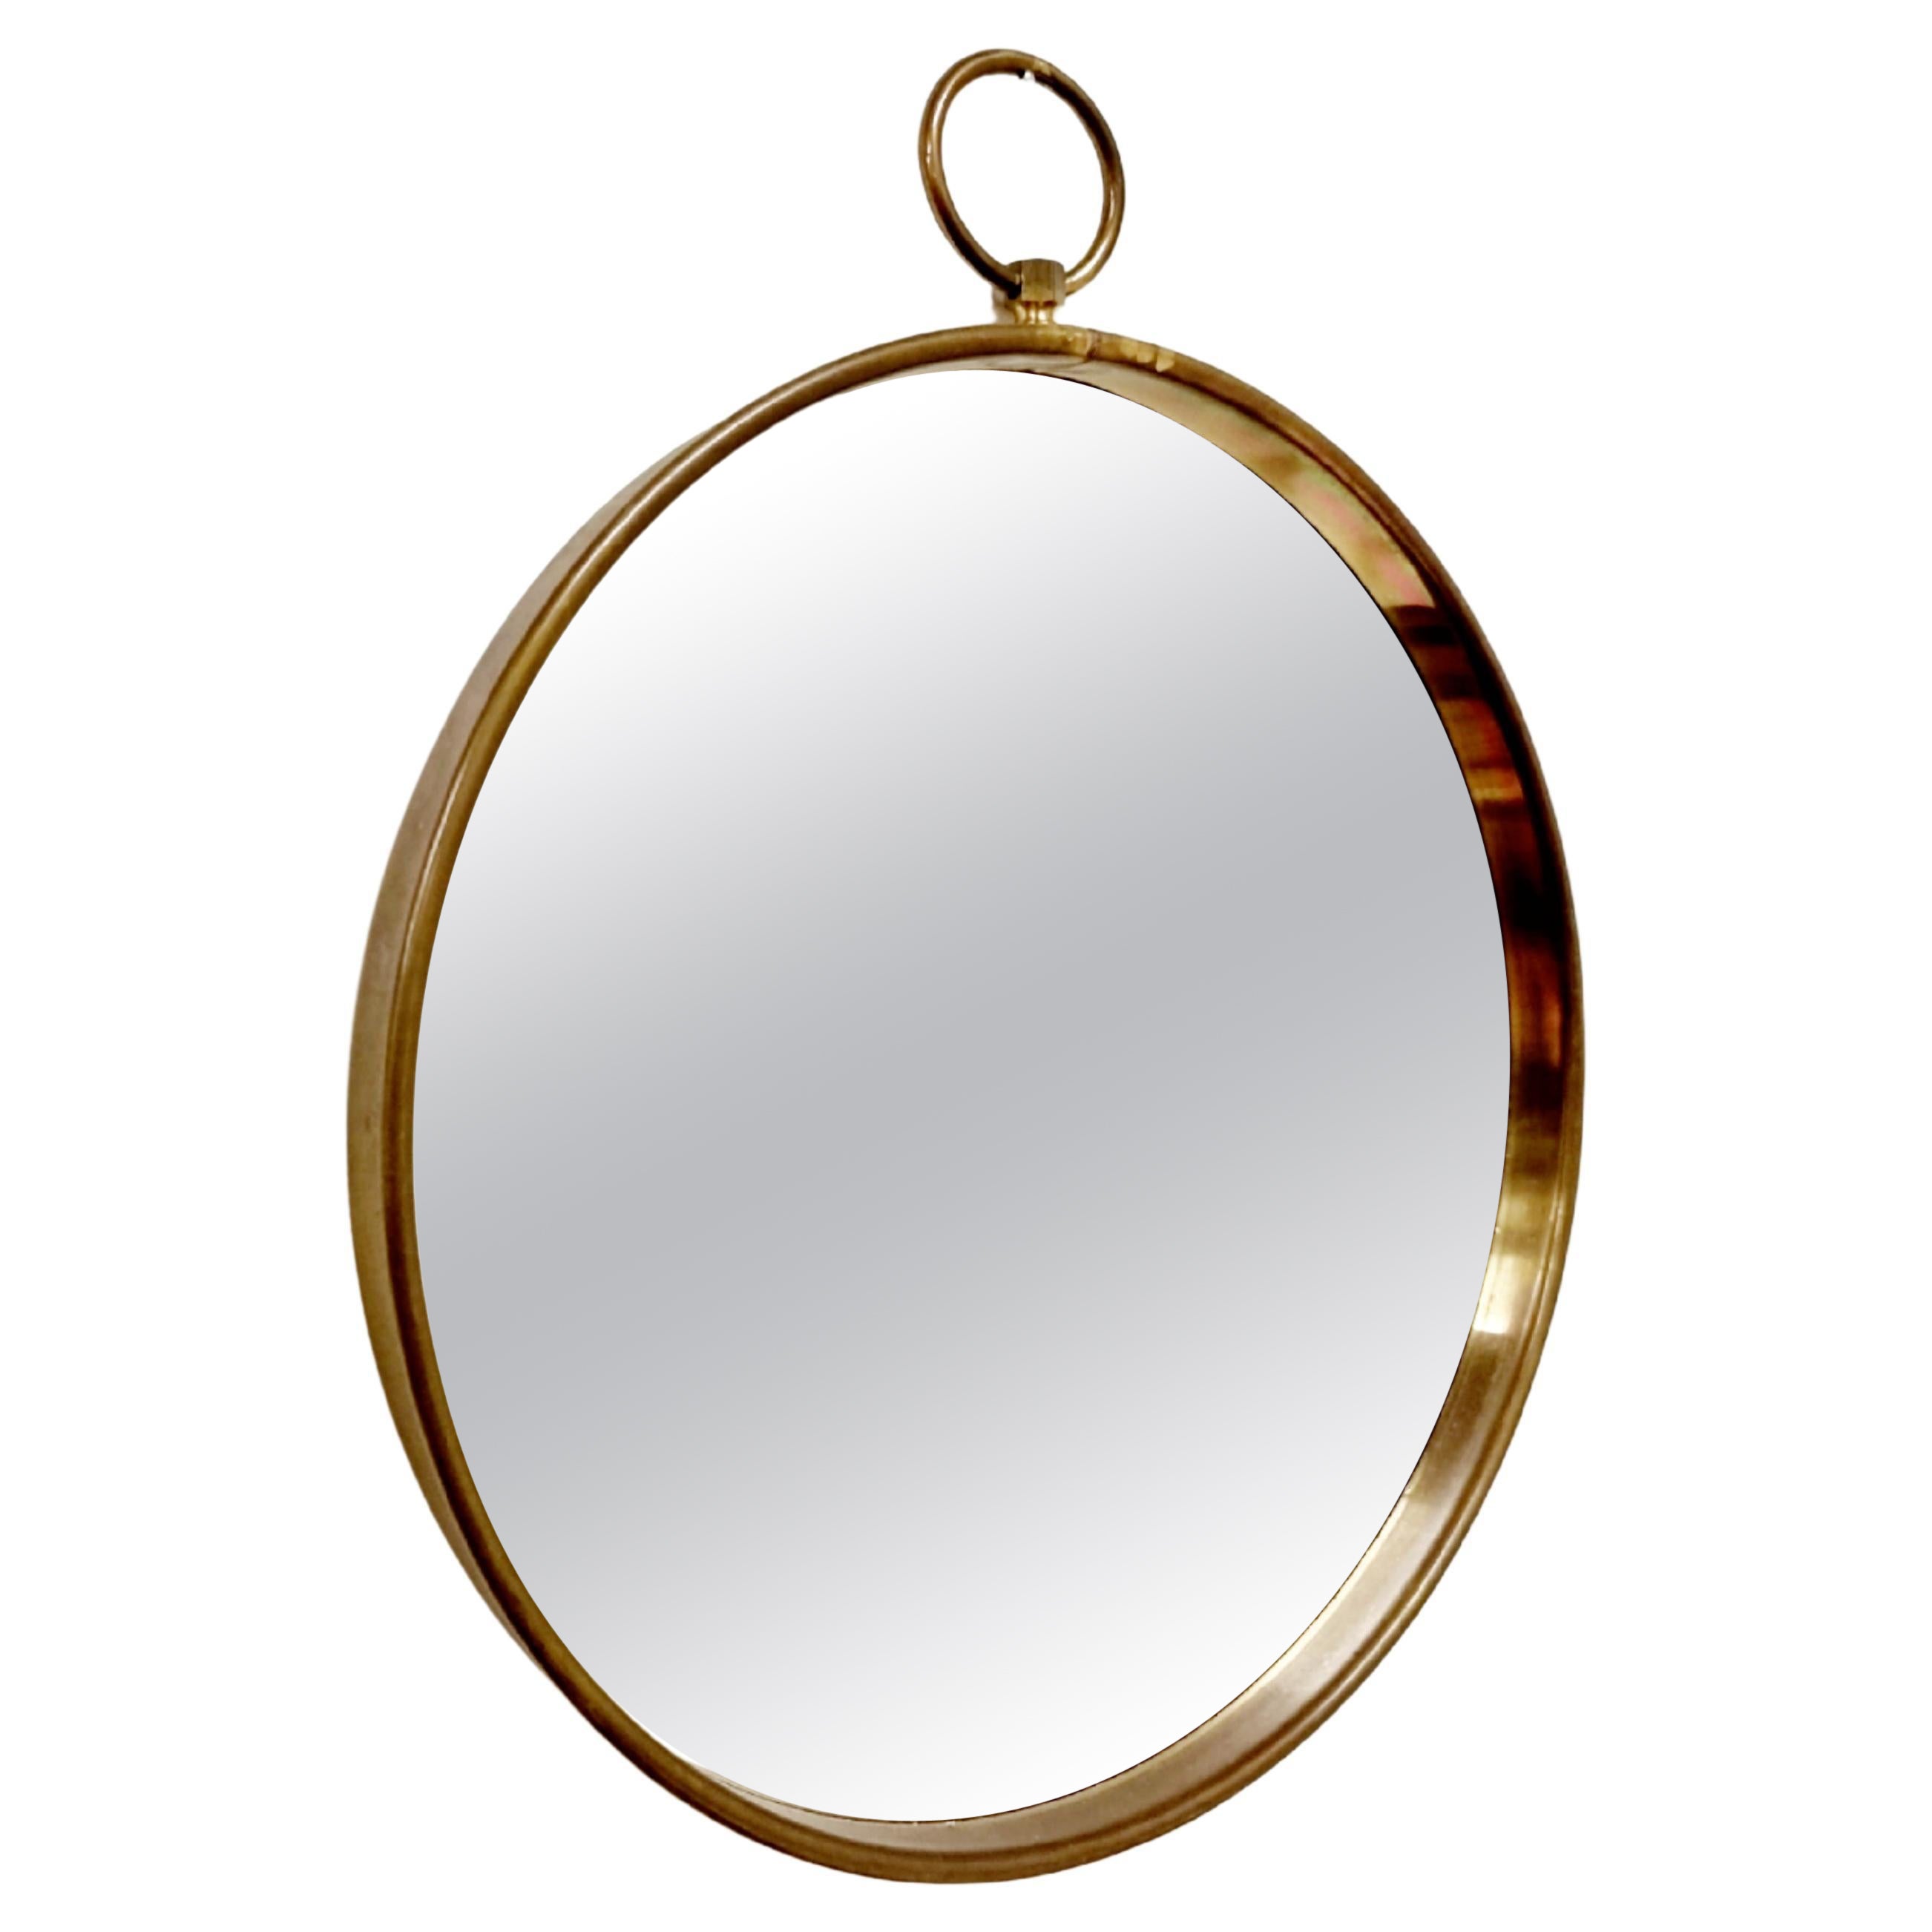 Mirror with Brass Frame, Pocketwatch Shaped, Mid-Century Modern